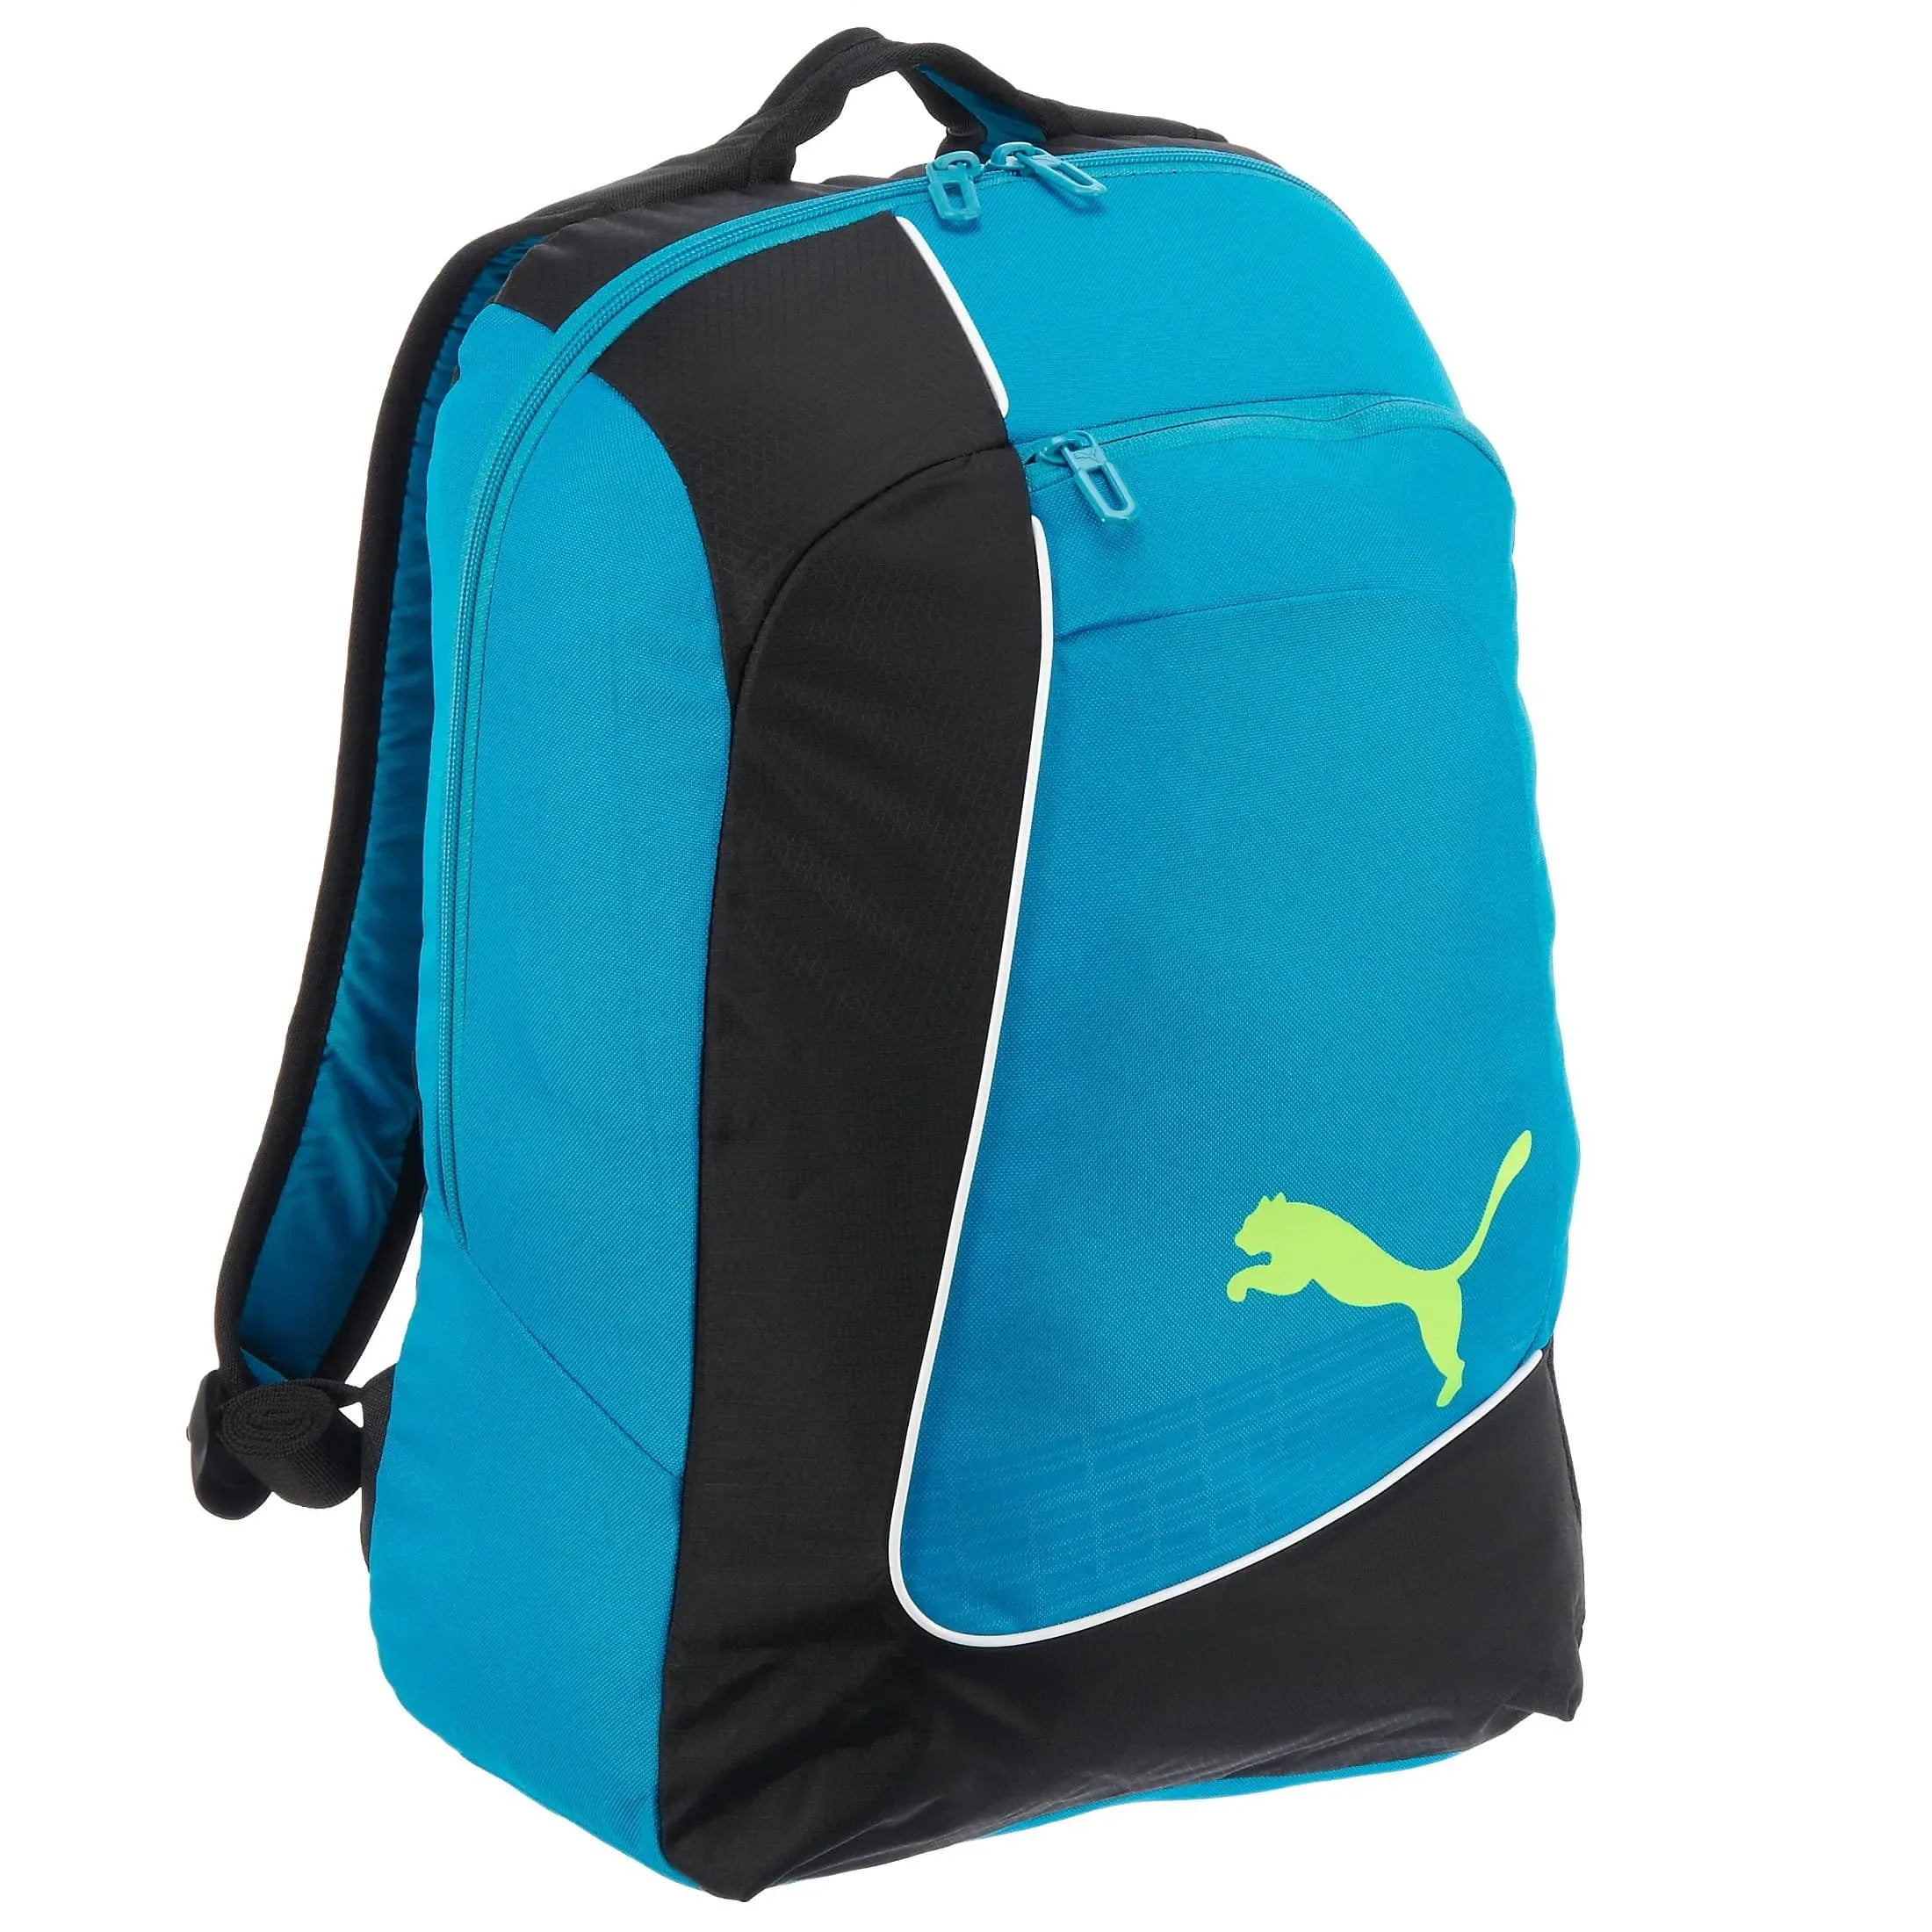 Puma evoPOWER Football Backpack Backpack 48 cm - blue-black-white